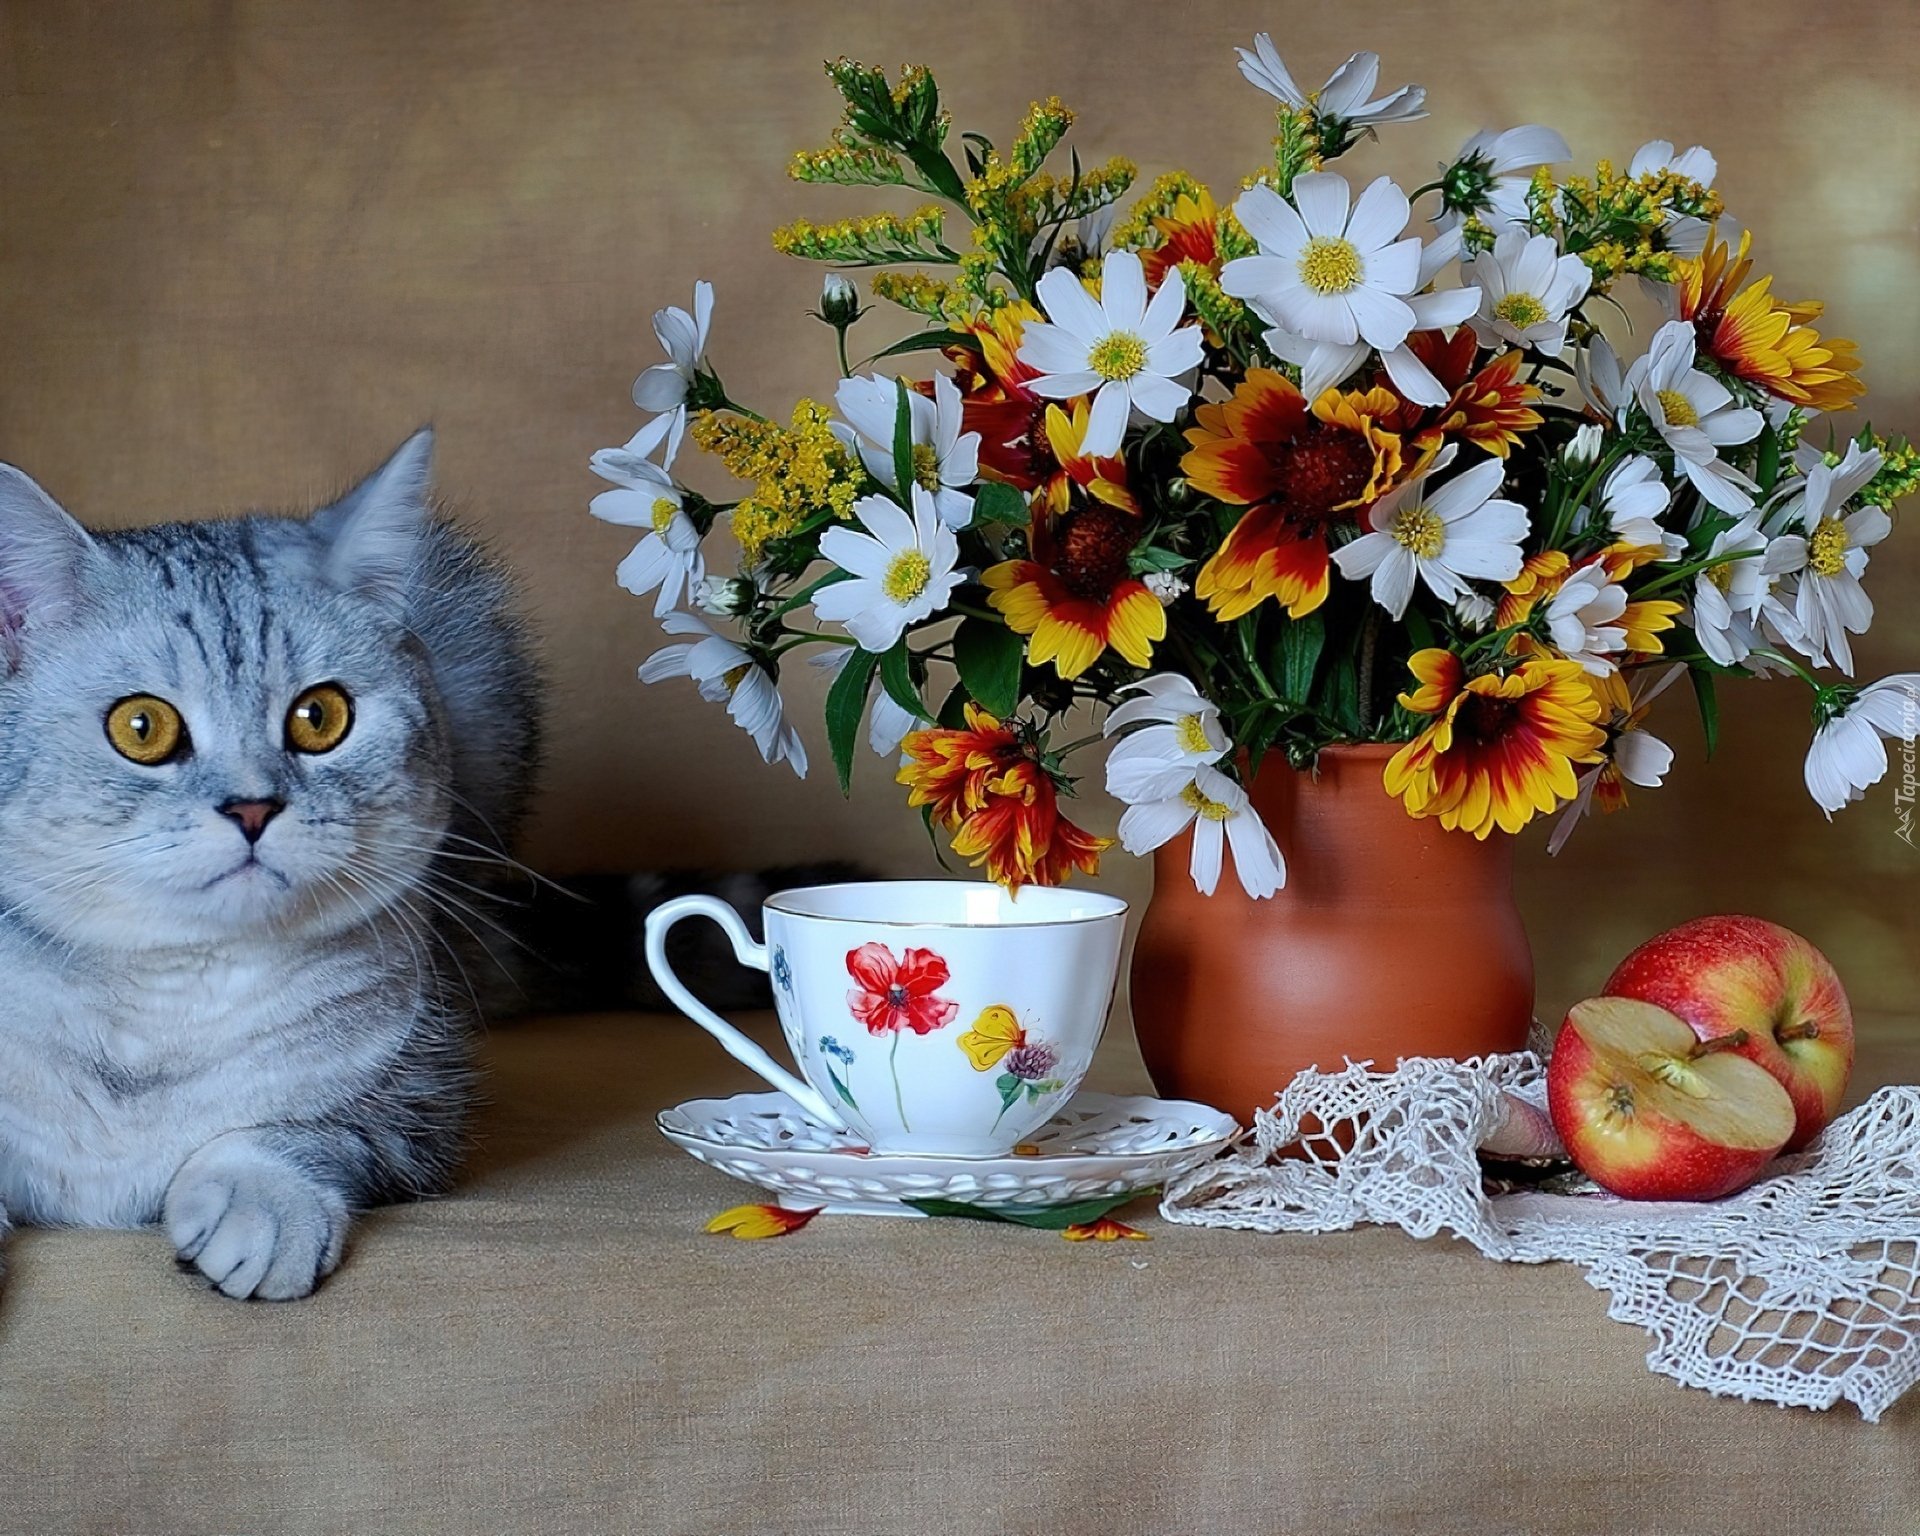 Доброе утро картинки красивые котята. Доброе утро котики. Открытки с добрым утром с котятами. Котик с цветами. С добрым весенним утром с котиками.